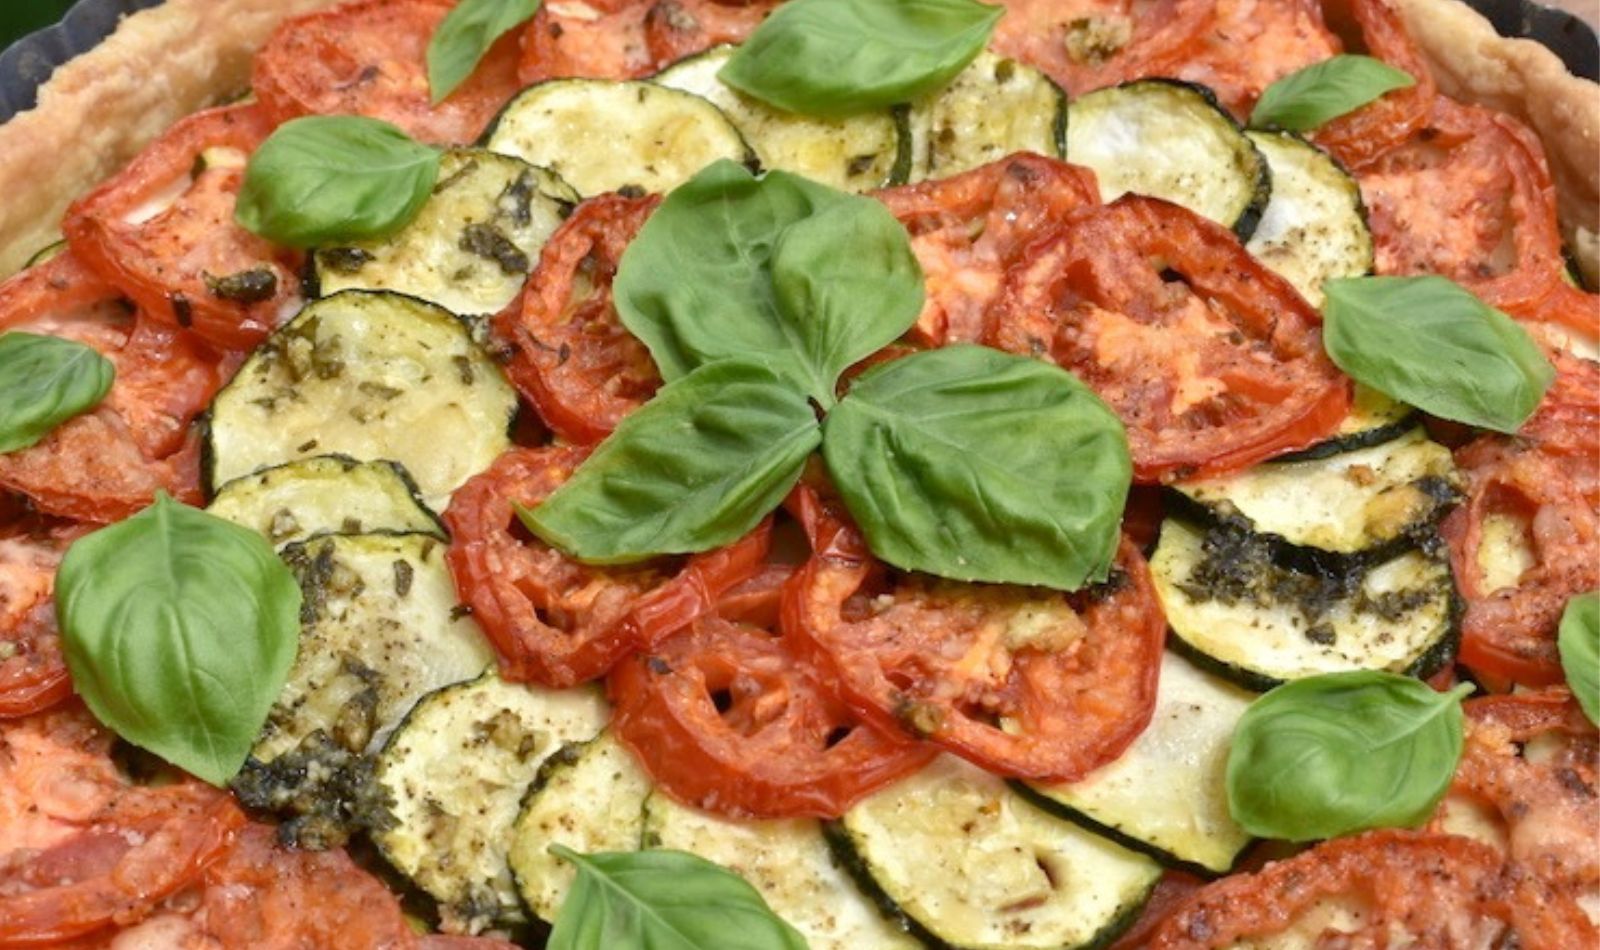 zucchini-and-tomato-tart garnished with herbs